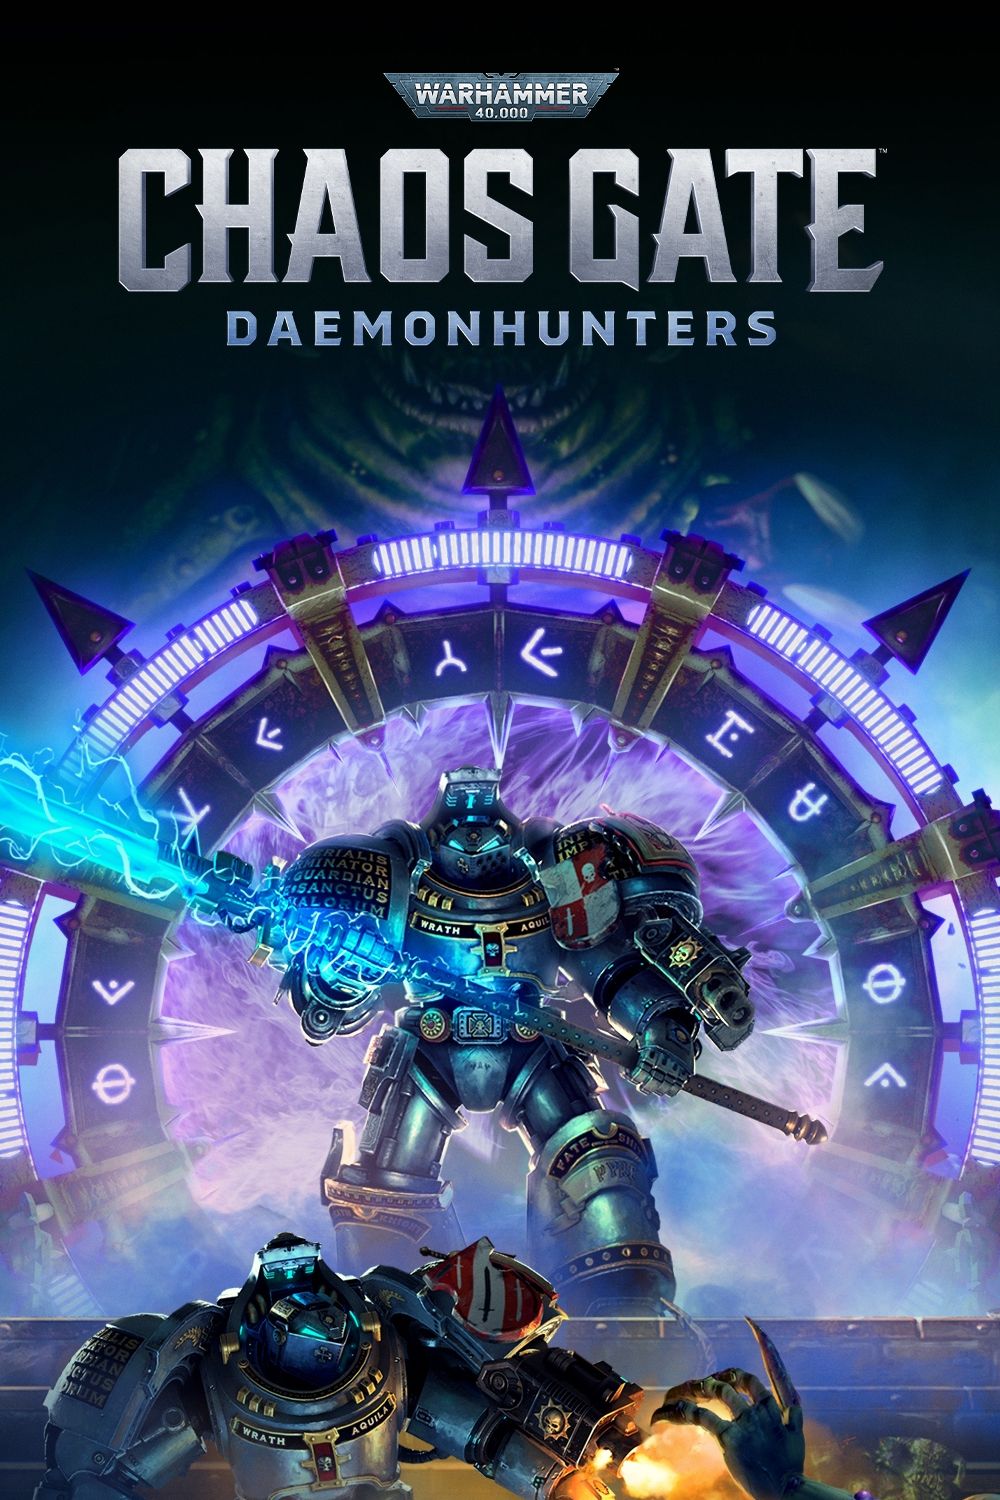 Warhammer 40,000 Chaos Gate Daemonhunters